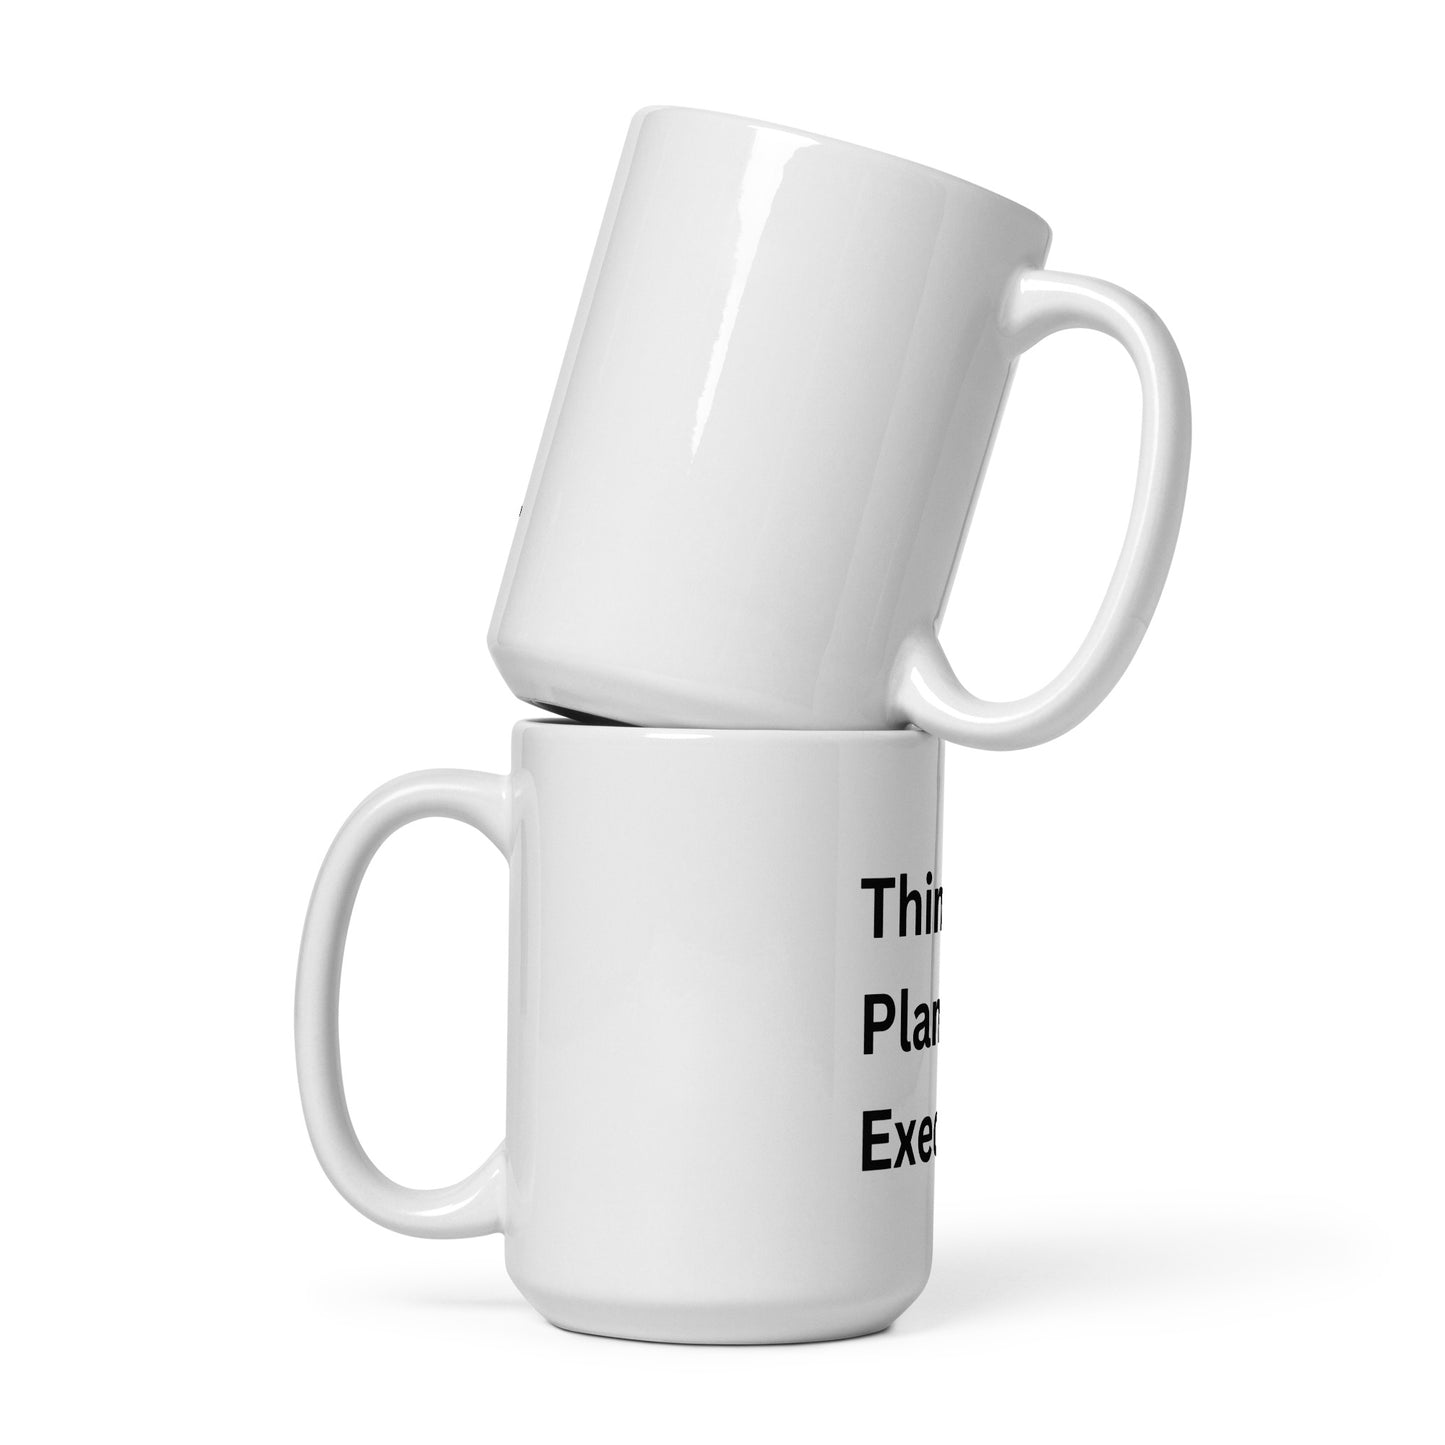 Think. Plan. Execute. Strategy Coffee Mug for Entrepreneurs